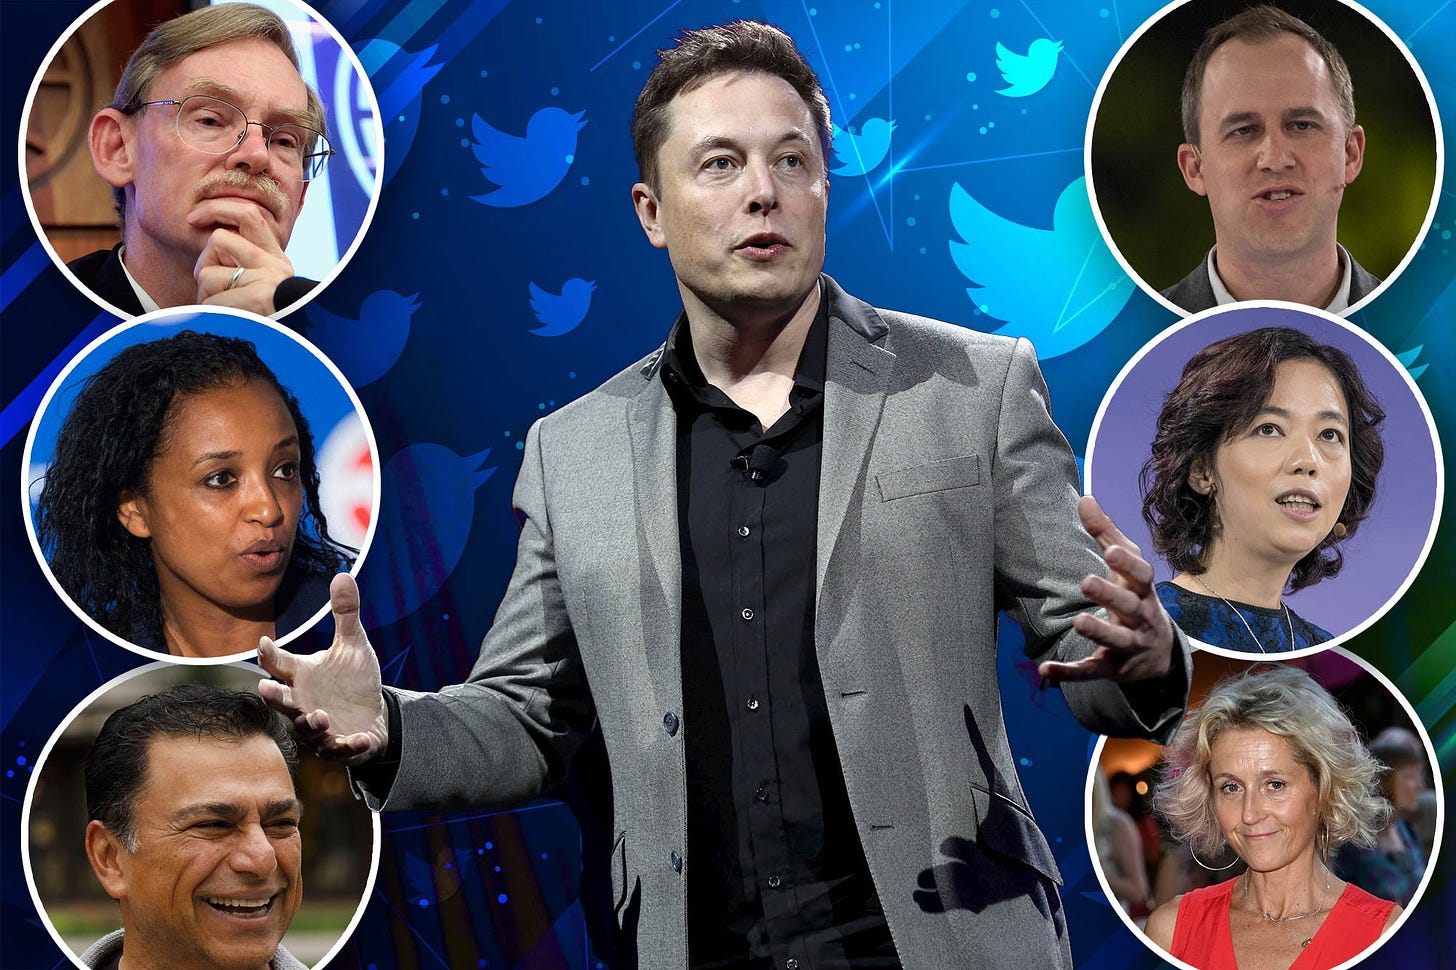 The Twitter board members fighting Elon Musk's takeover bid